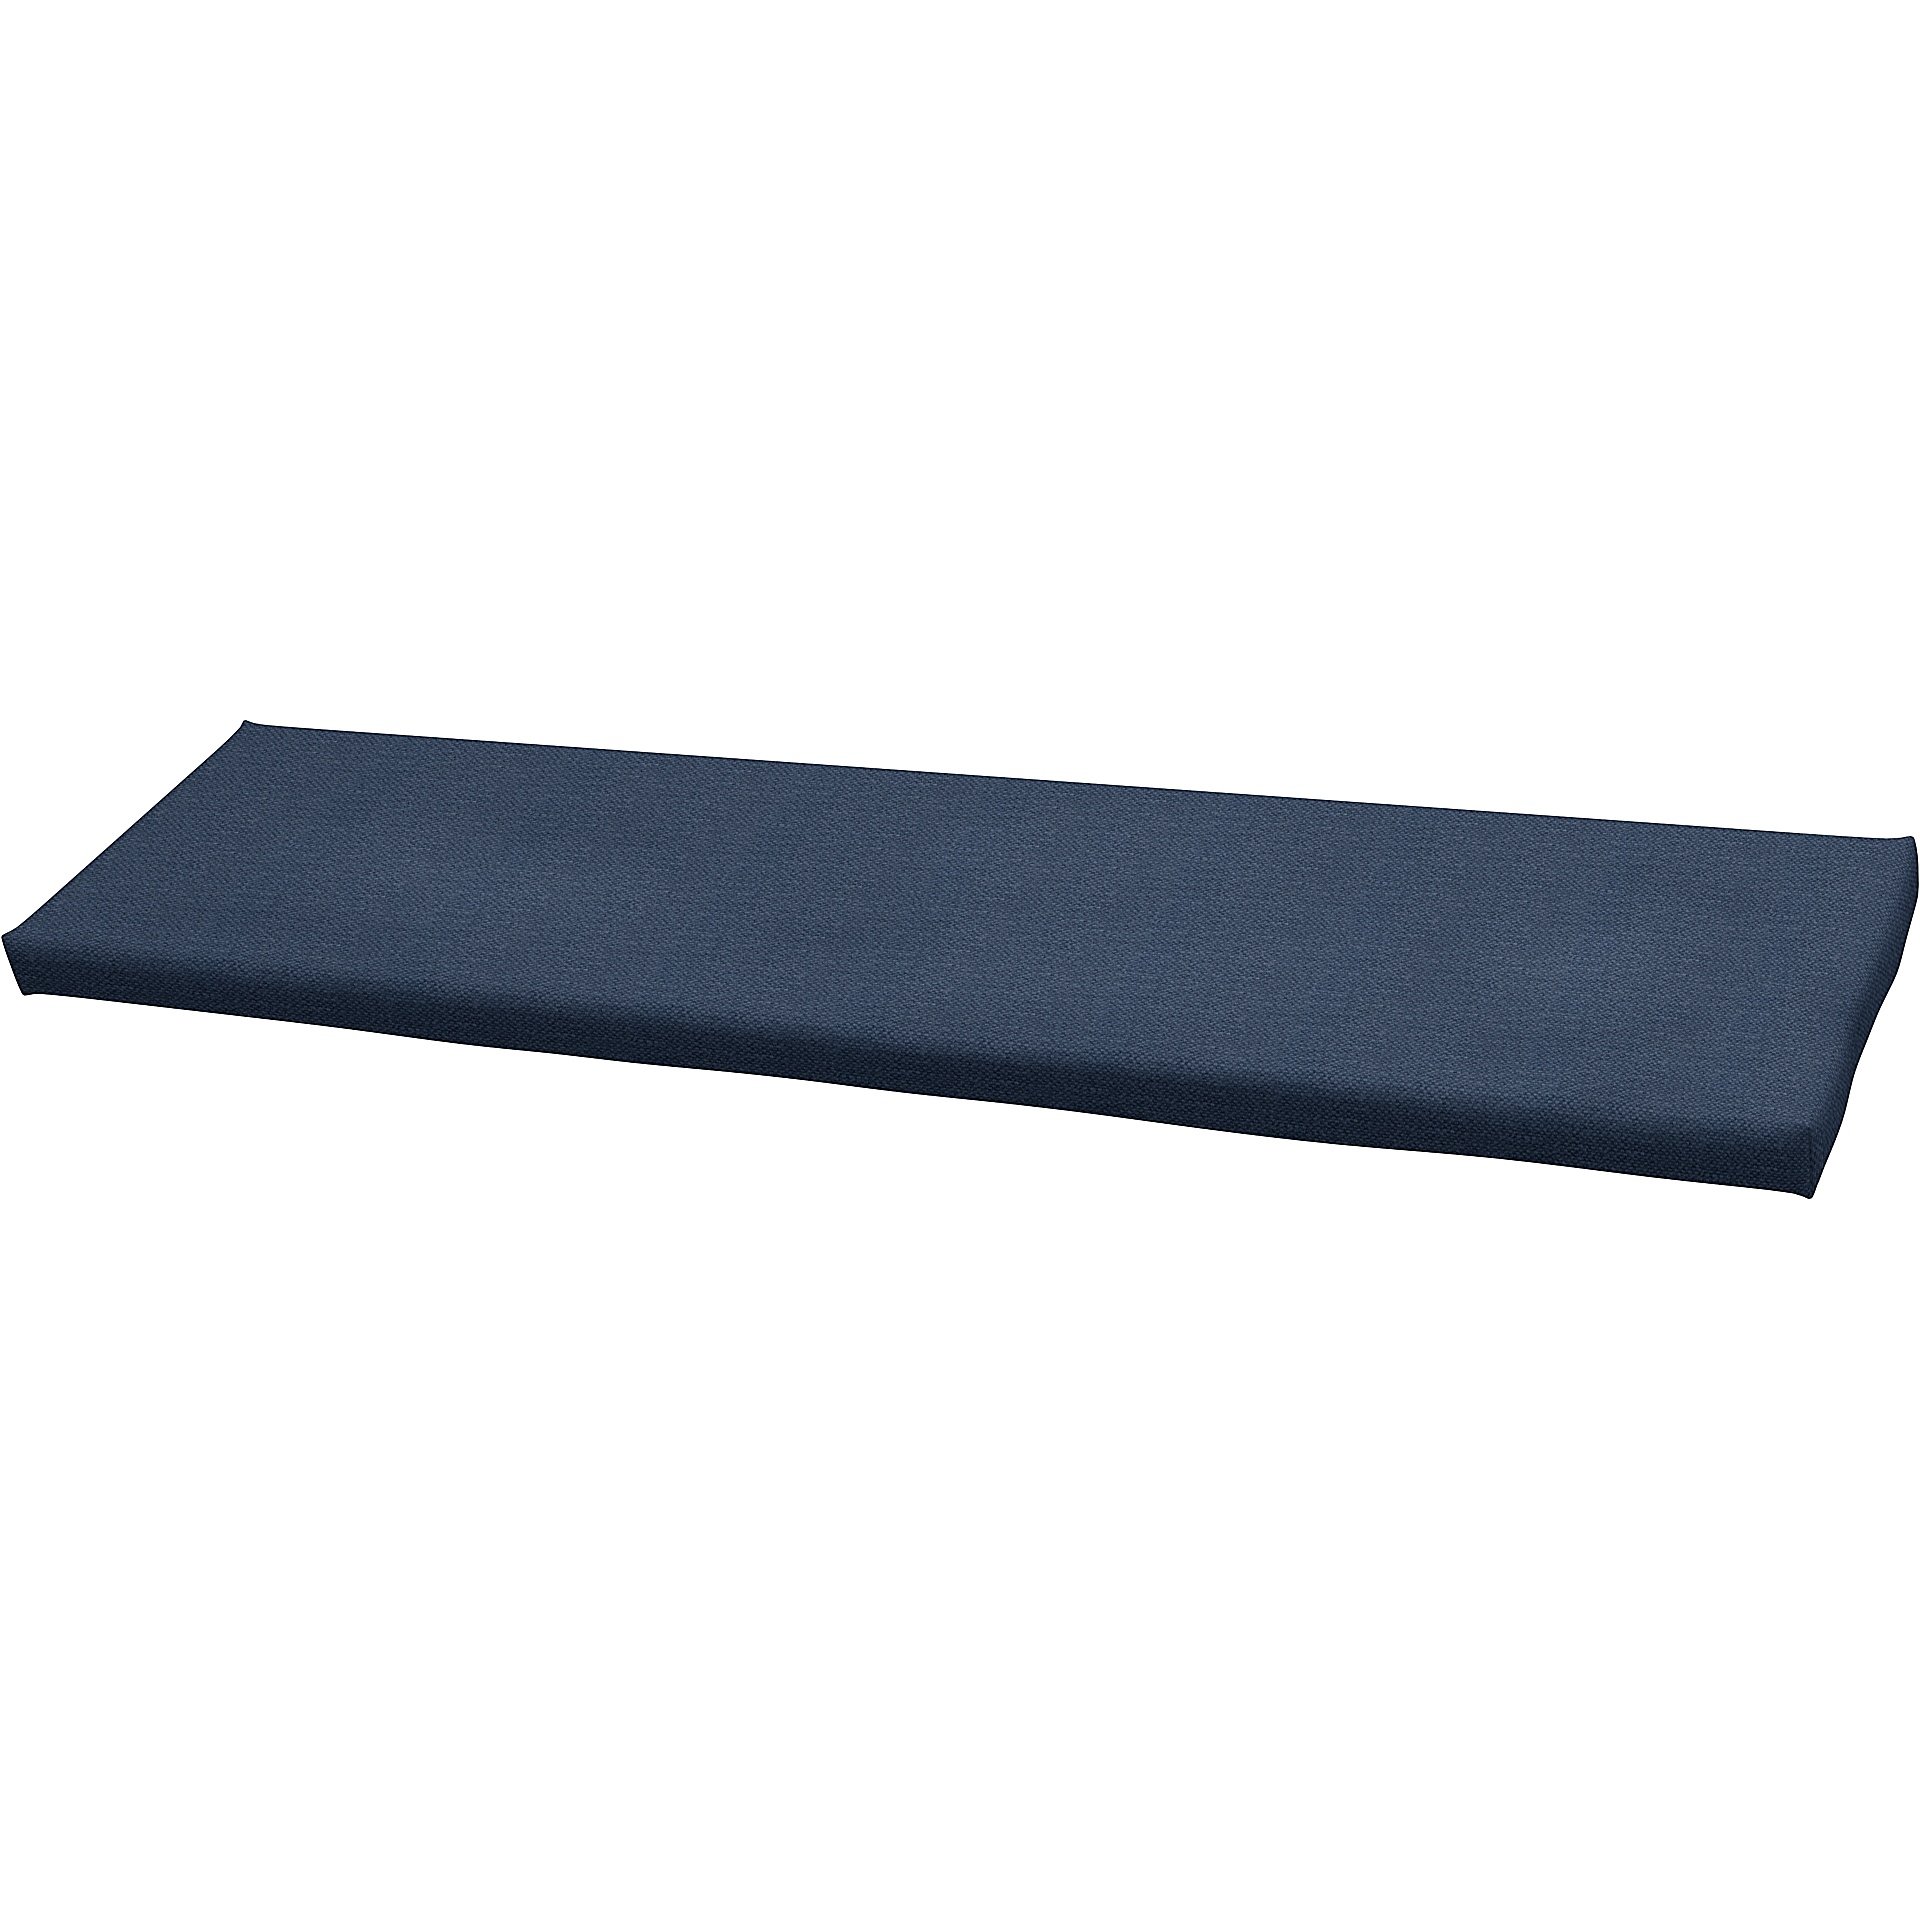 IKEA - Universal bench cushion cover 120x35x3,5 cm, Navy Blue, Linen - Bemz